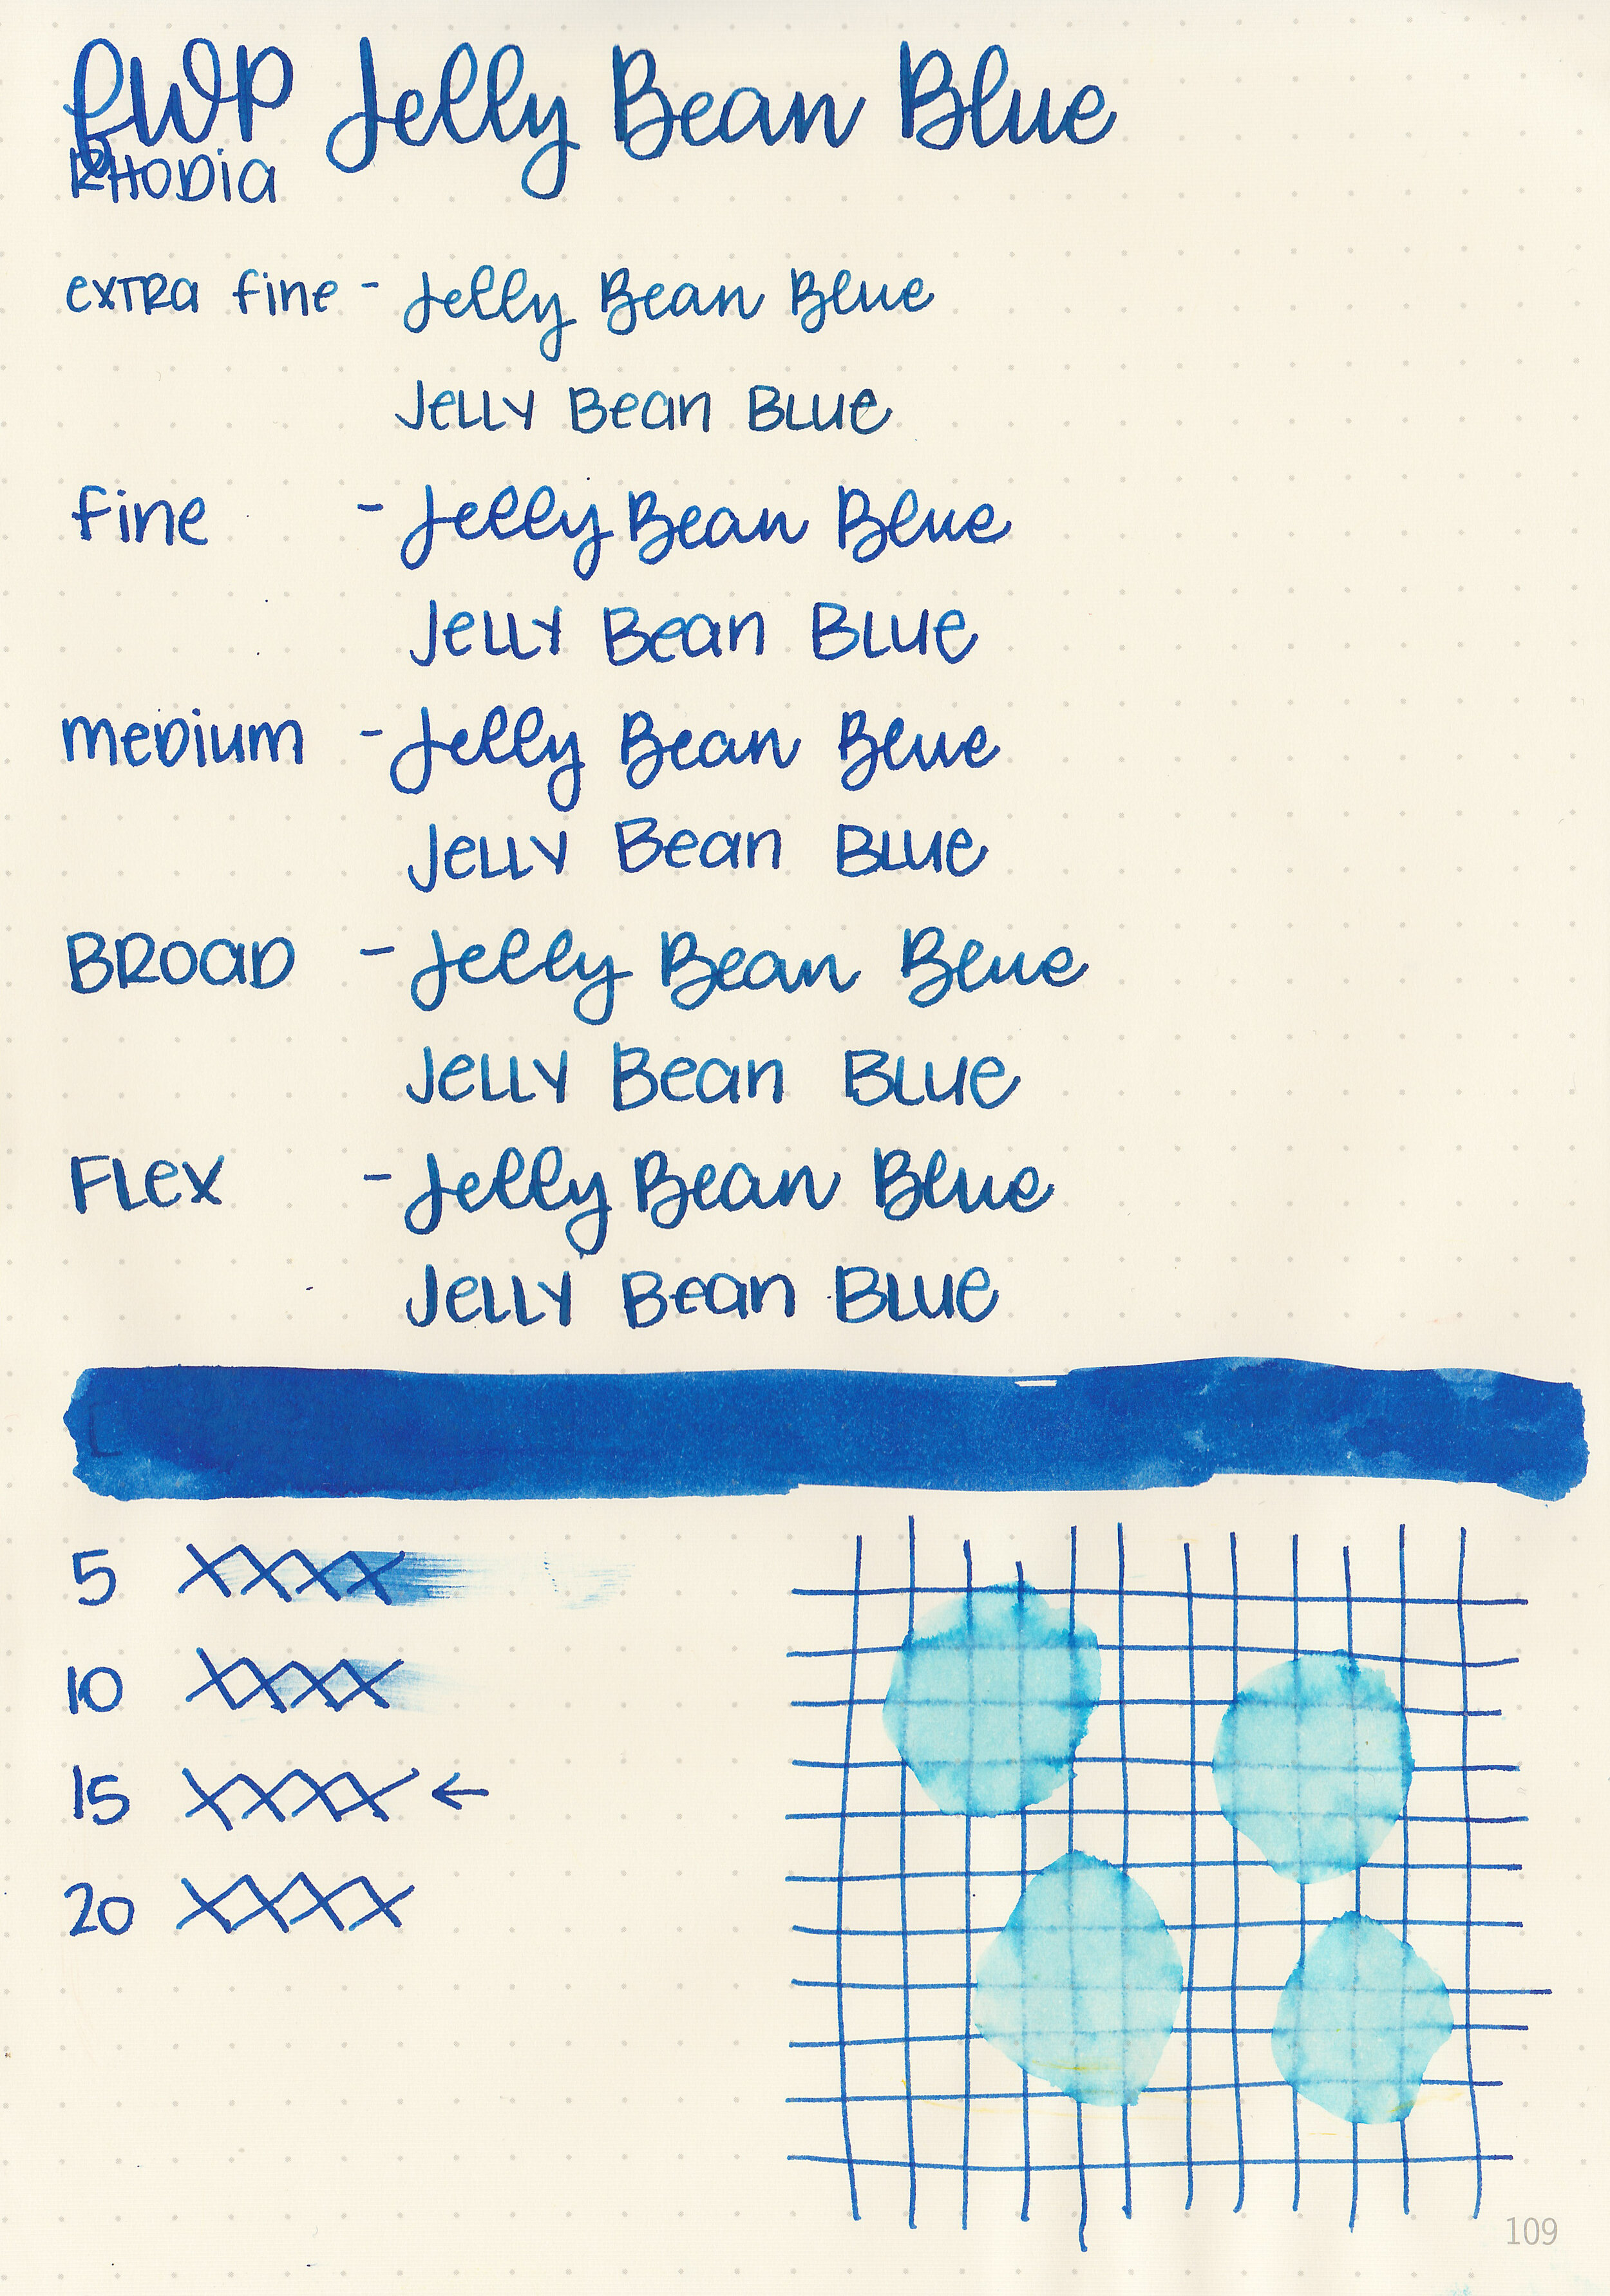 fwp-jelly-bean-blue-5.jpg